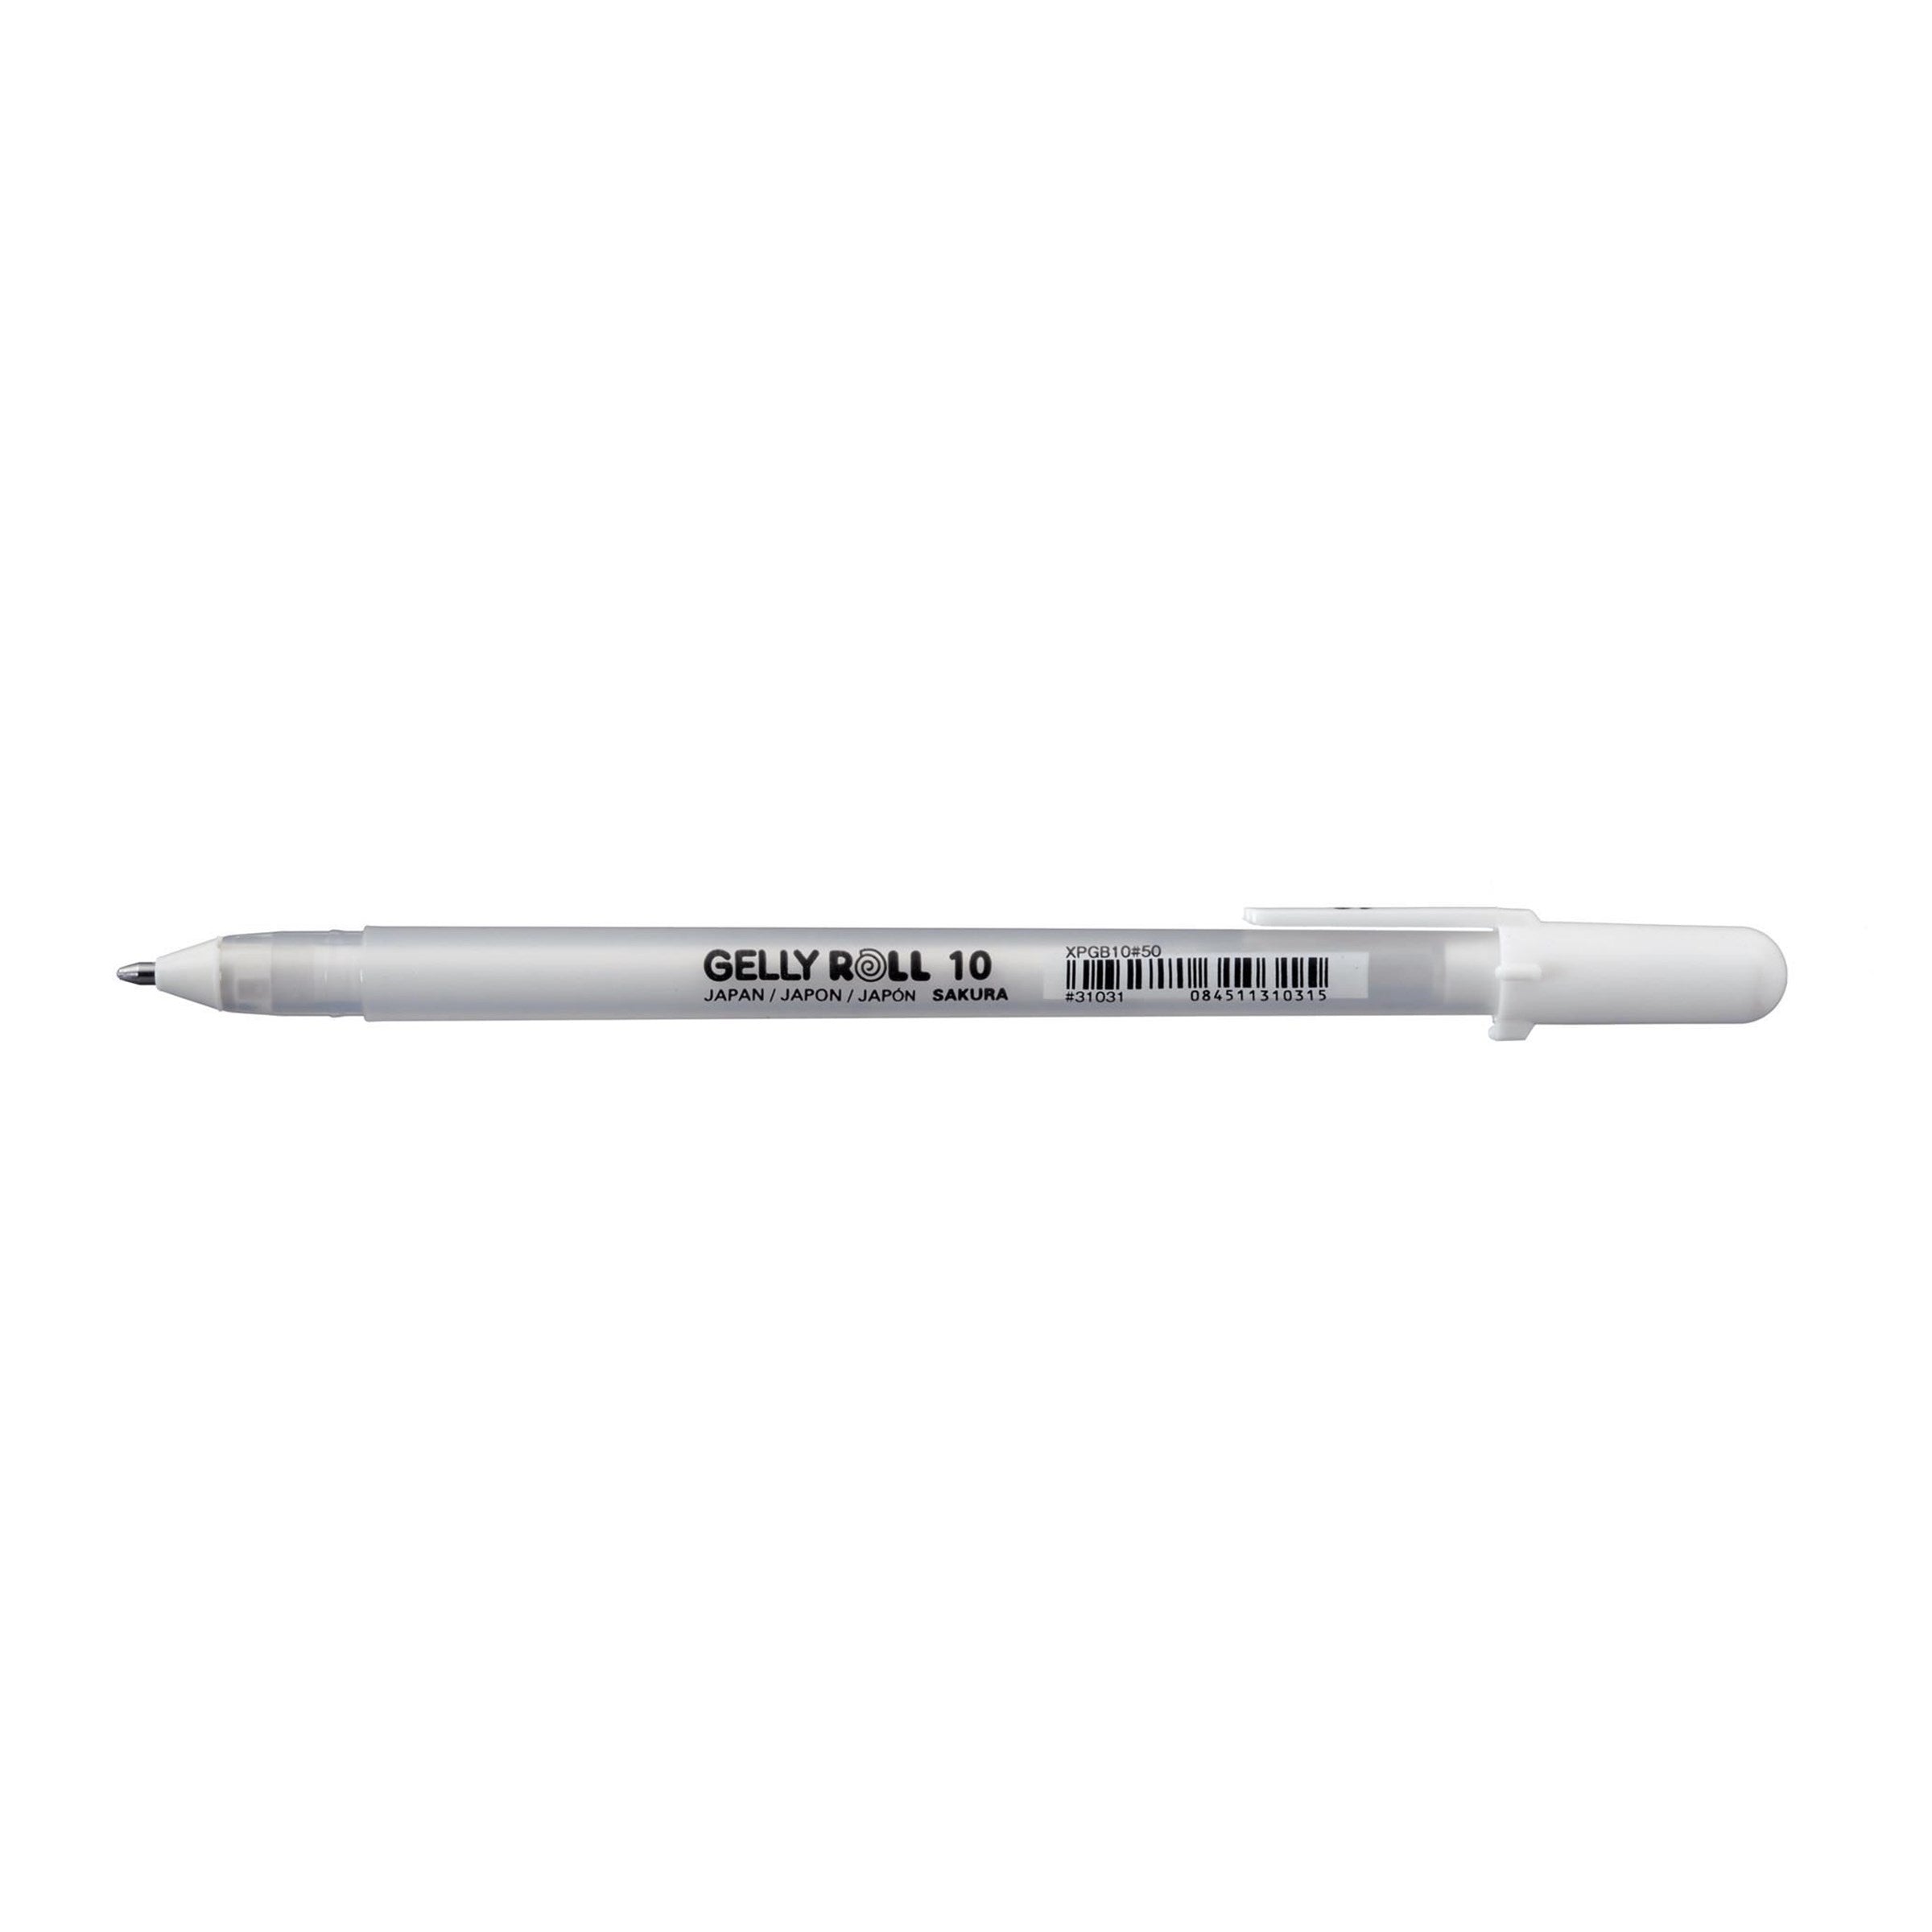 Sakura : Bright White Gelly Roll pen : 10 Bold: 1.0mm ball / 0.5mm line